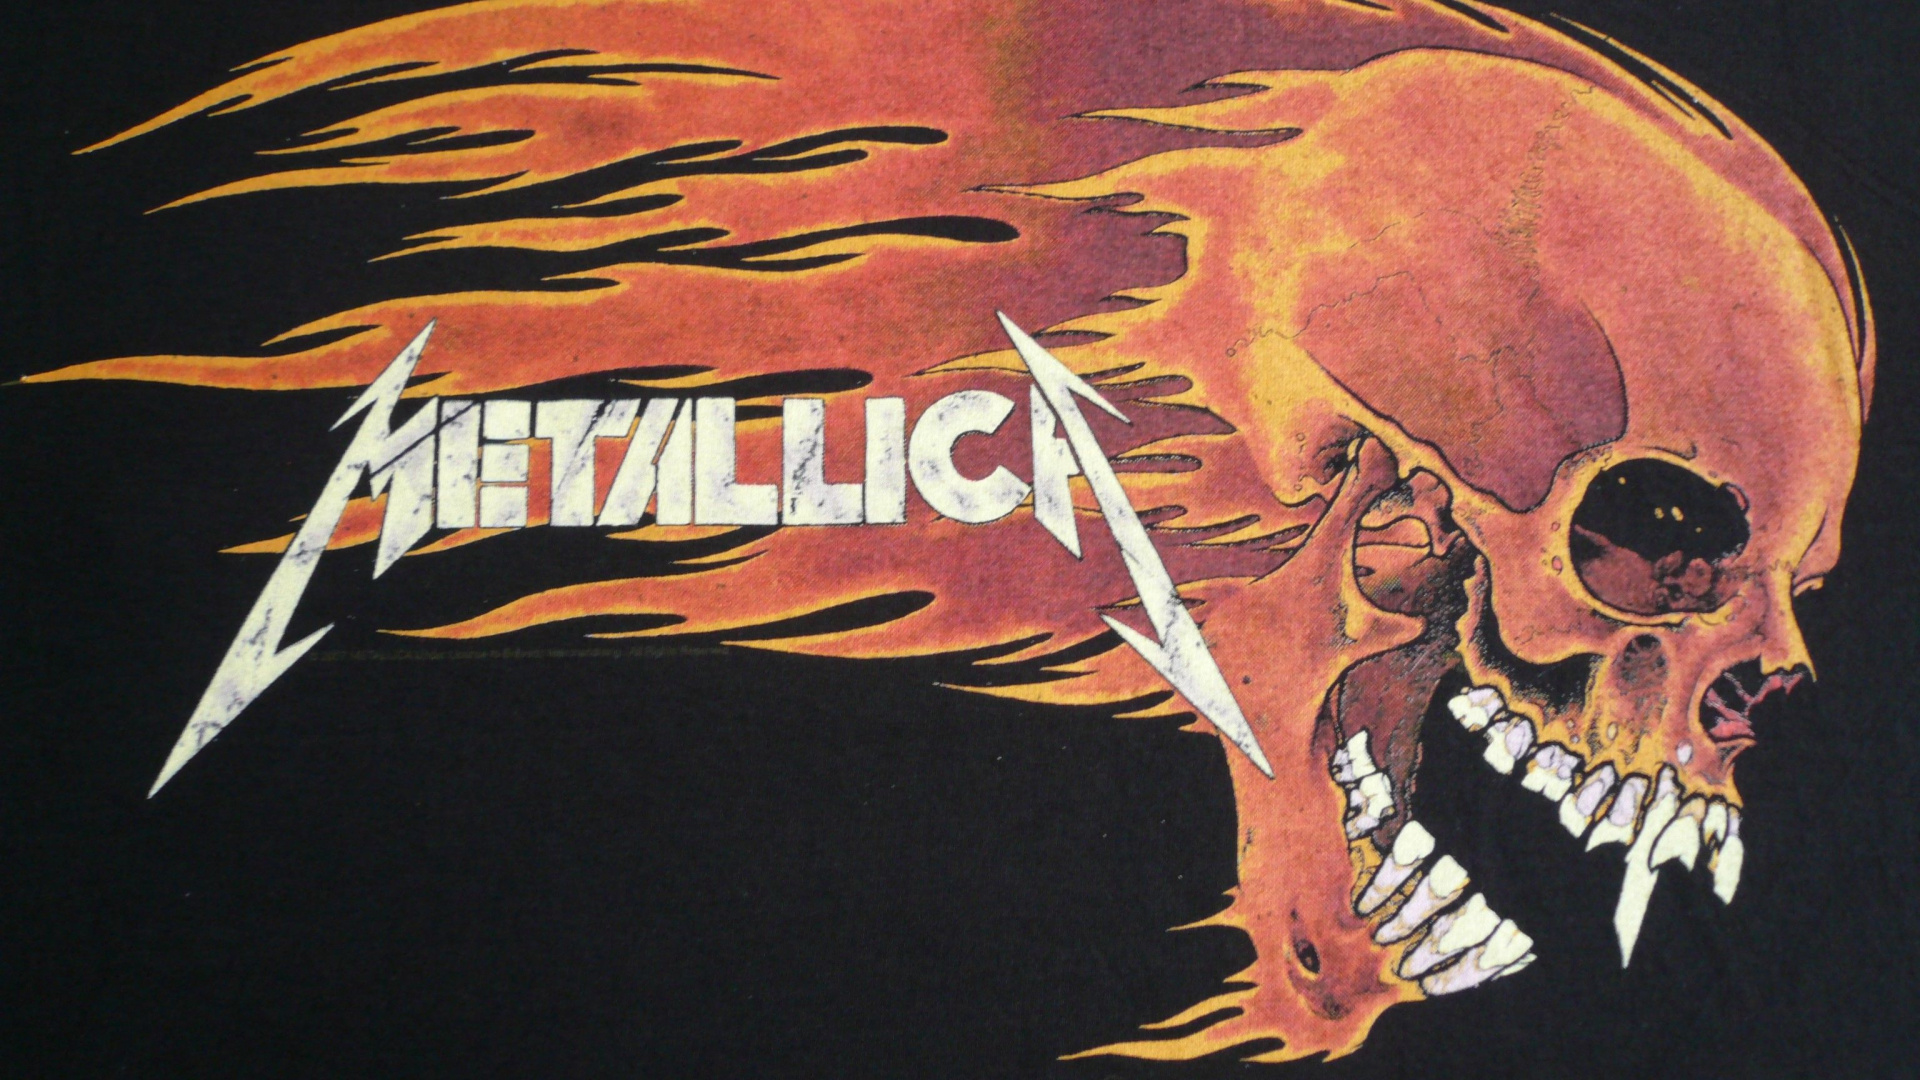 Metallica, Shirt, Heavy Metal, Skull, Bone. Wallpaper in 1920x1080 Resolution